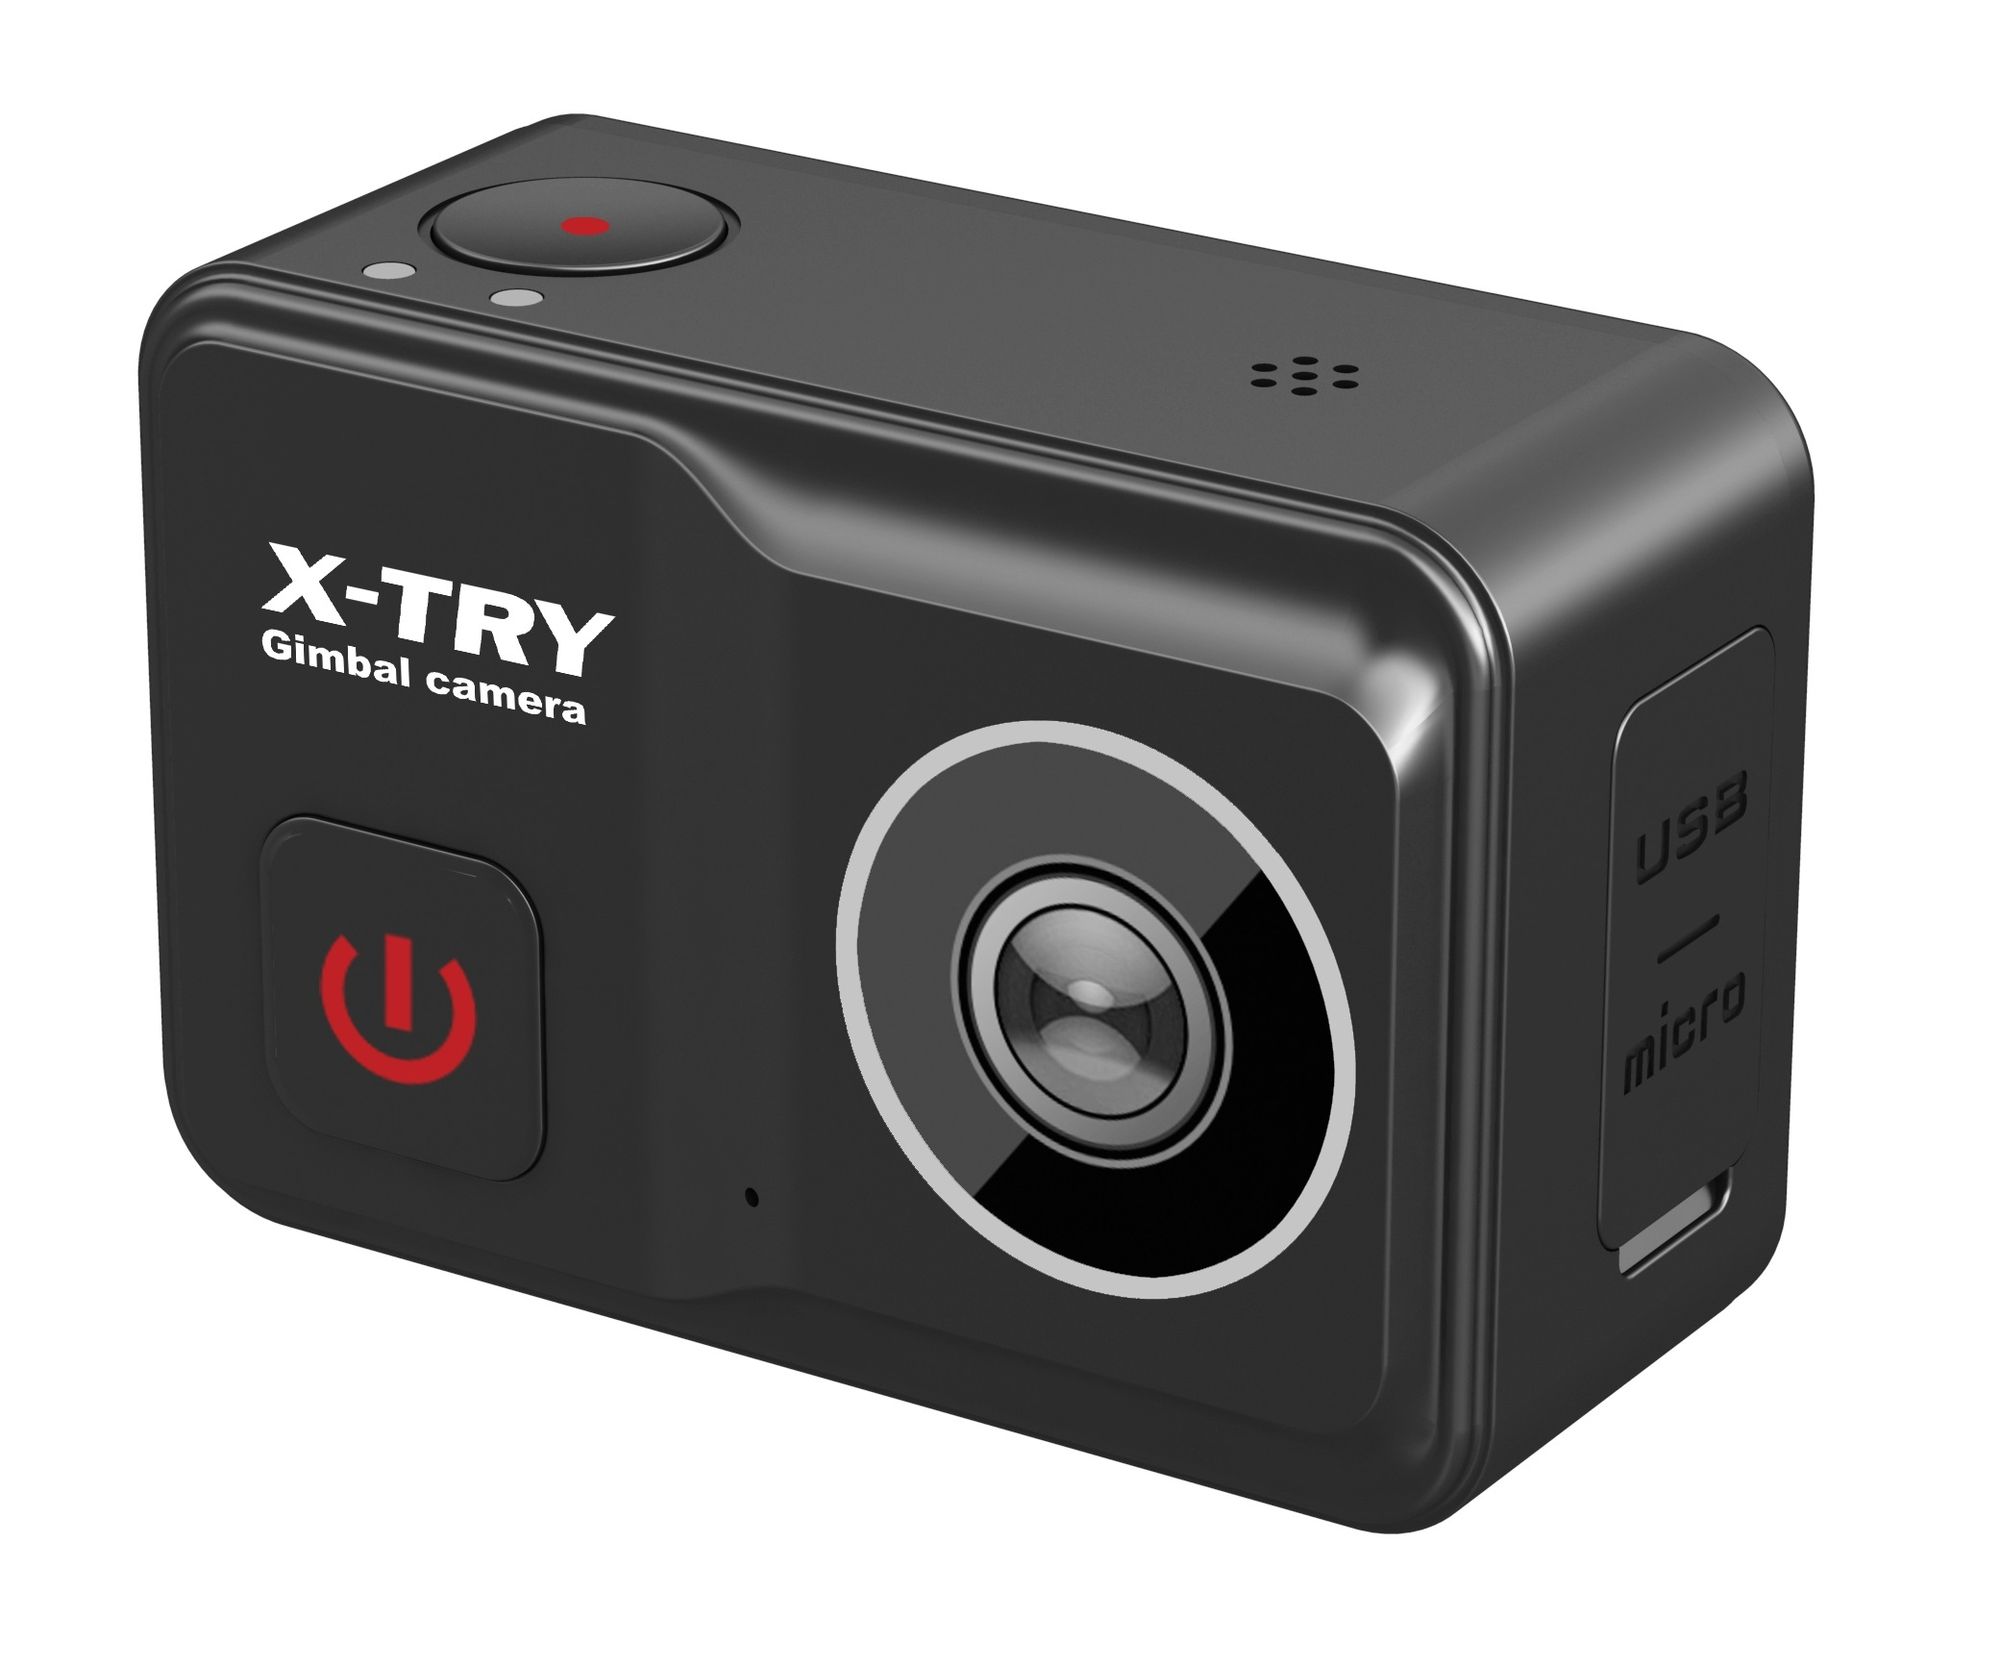 Экшн камера X-Try XTC501 Gimbal Real 4K/60FPS WDR Wi-Fi Autokit, цвет черный